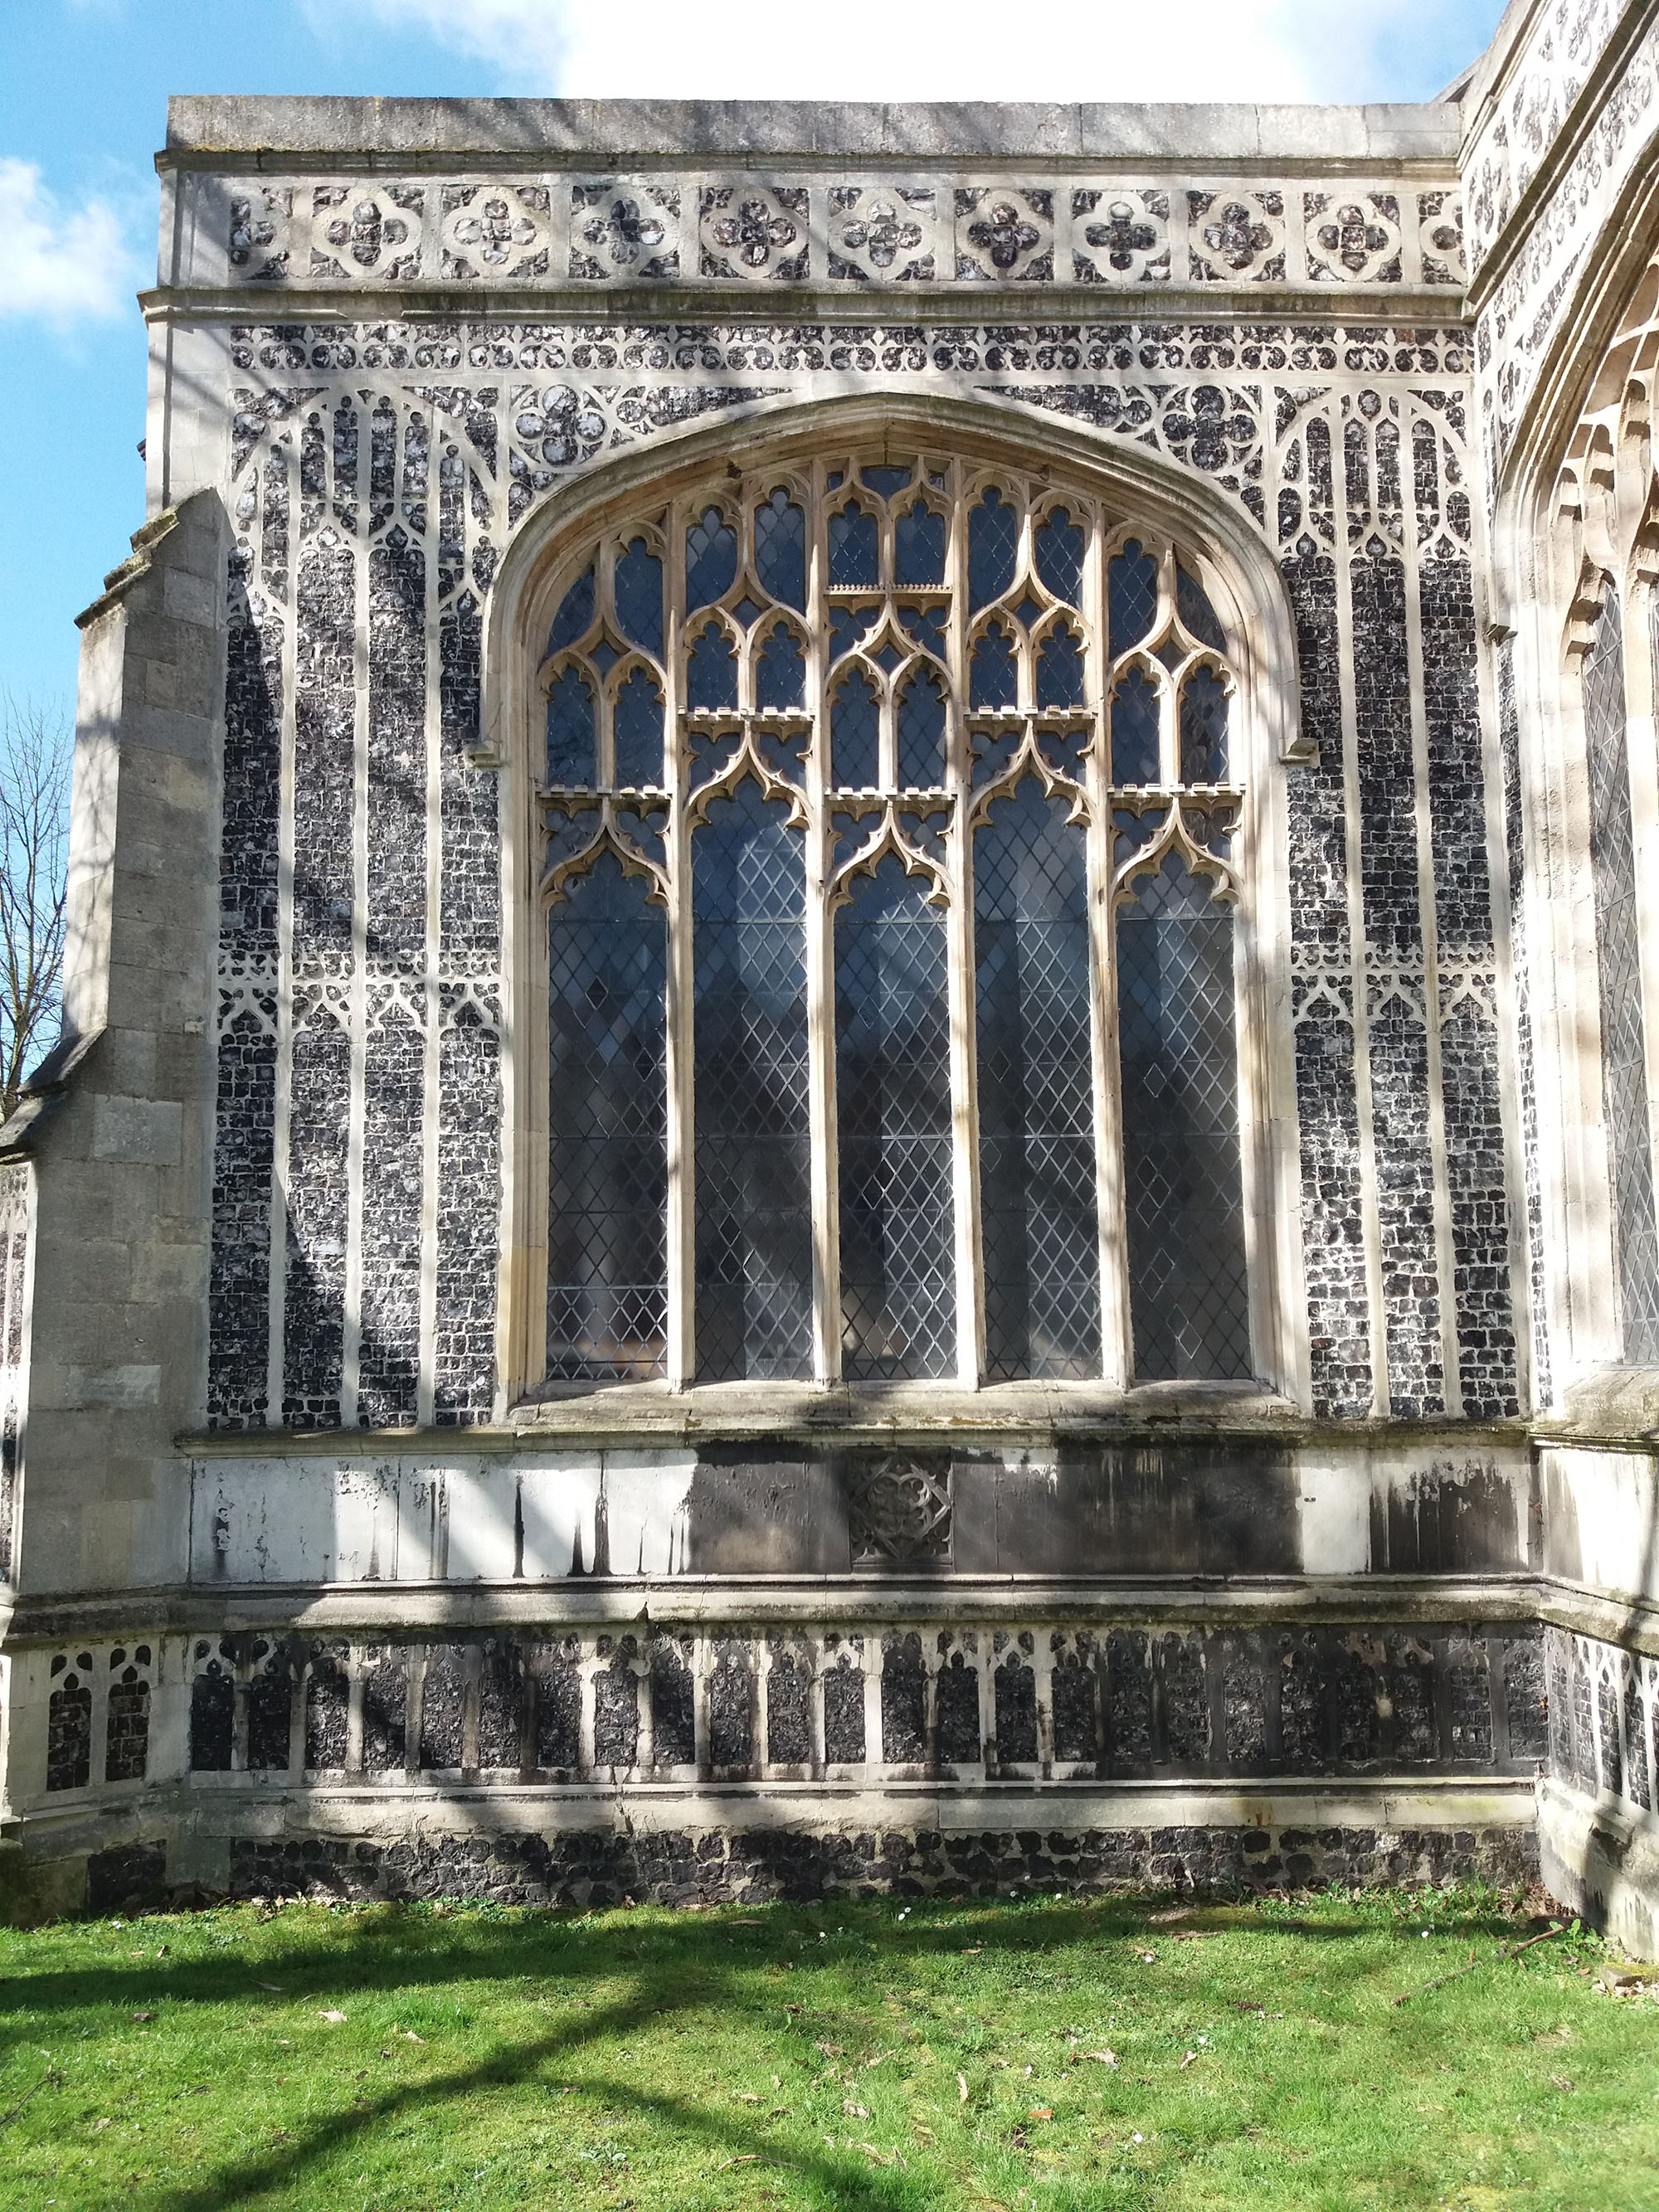 Exterior view of church window and surrounding stonework